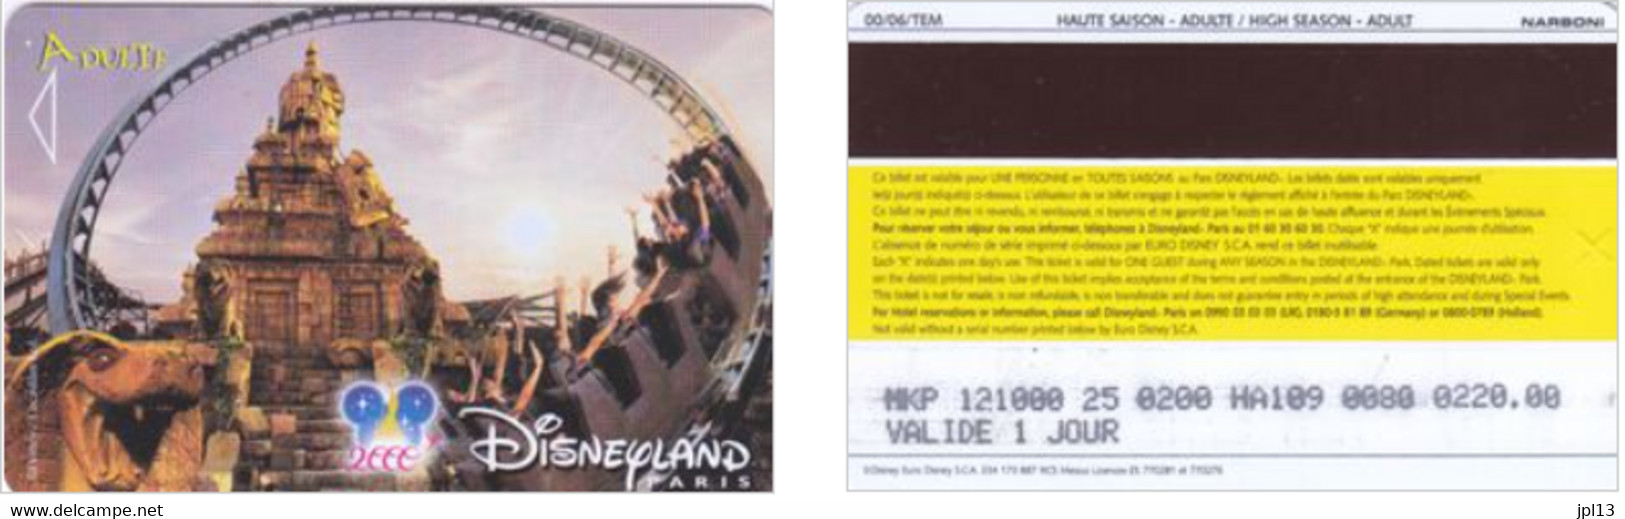 Passeport Disney - France - Disneyland Paris - 2000 - Disney Passports